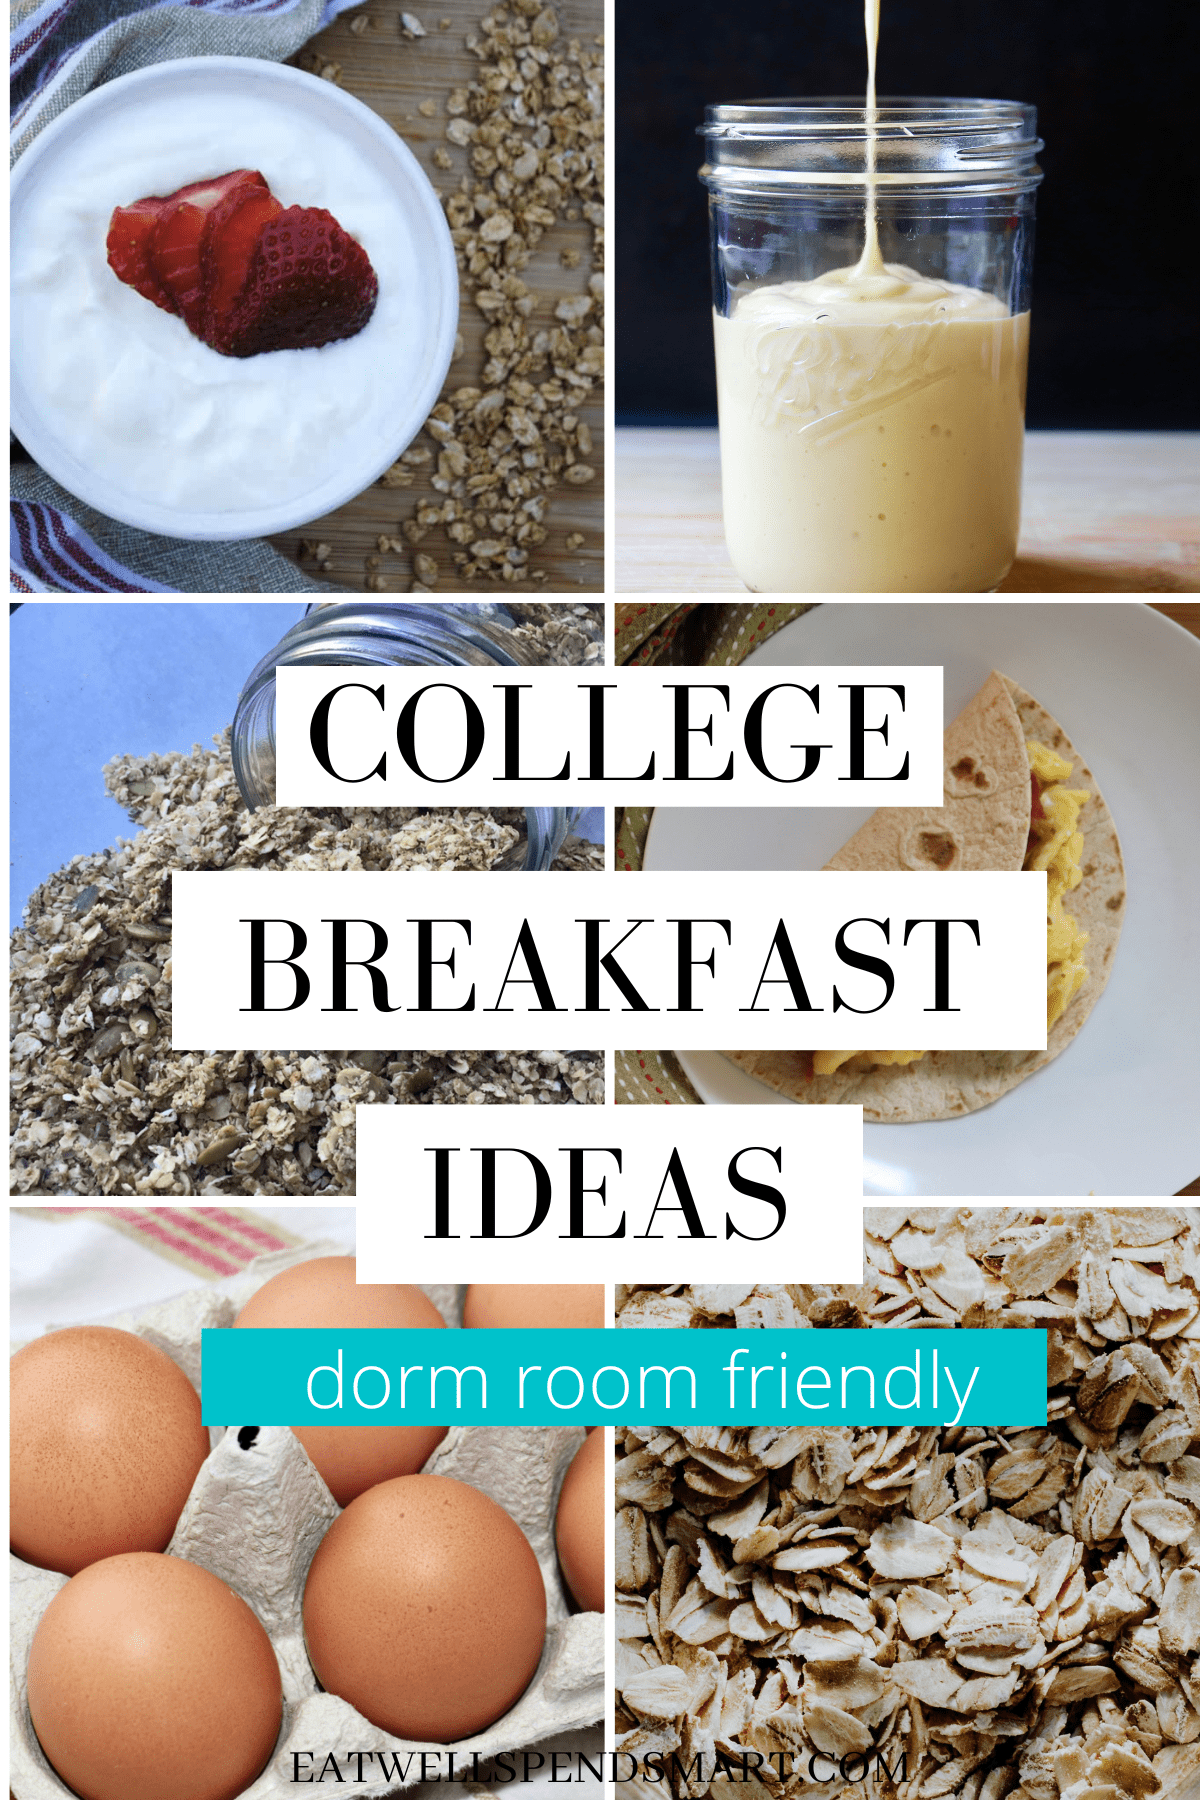 College breakfast ideas dorm room friendly